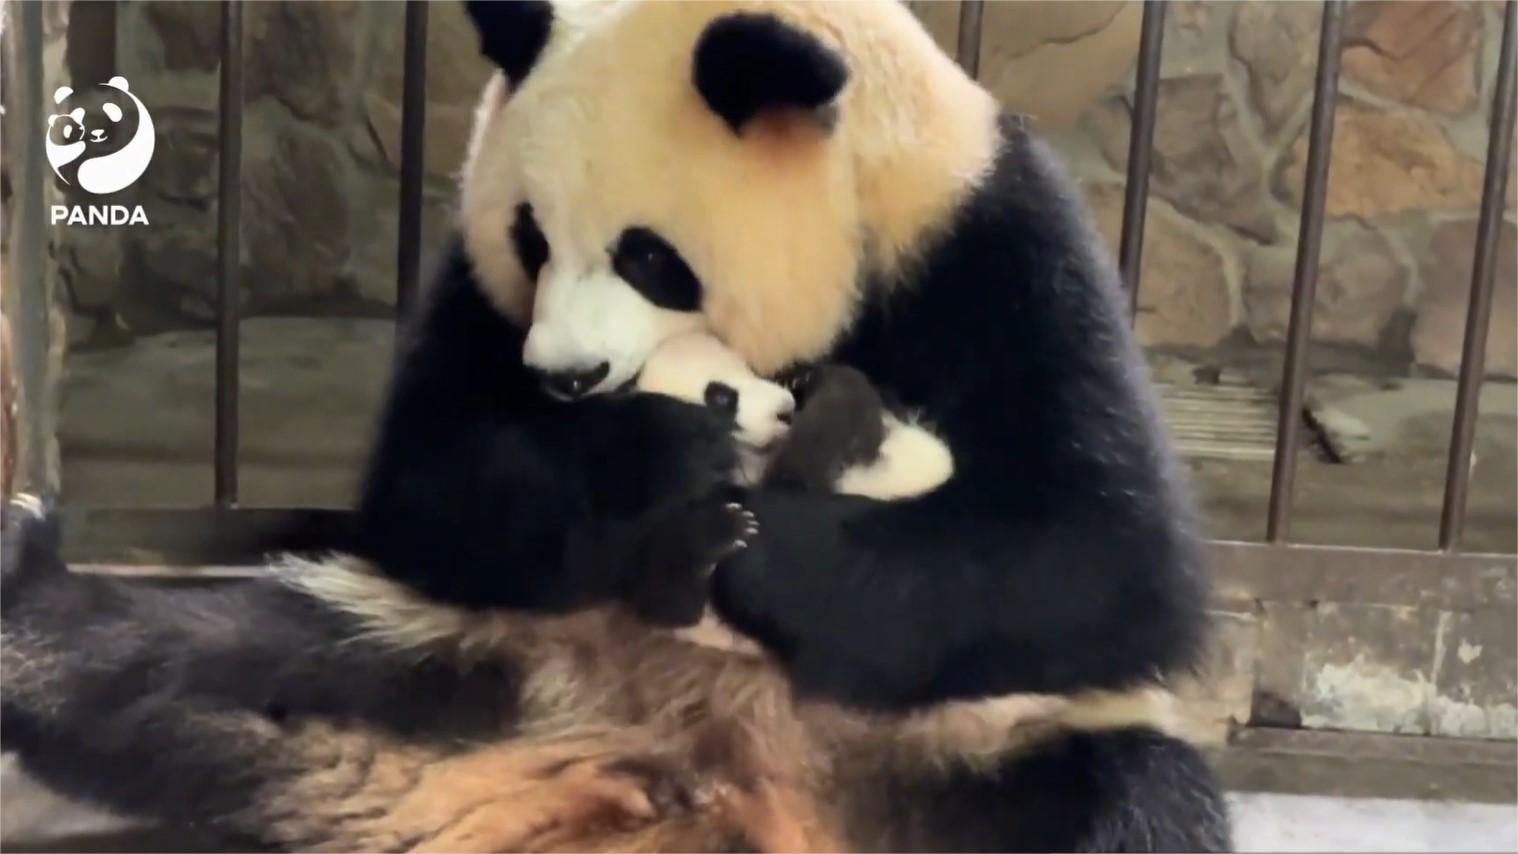 Giant panda's maternal love captivates netizens